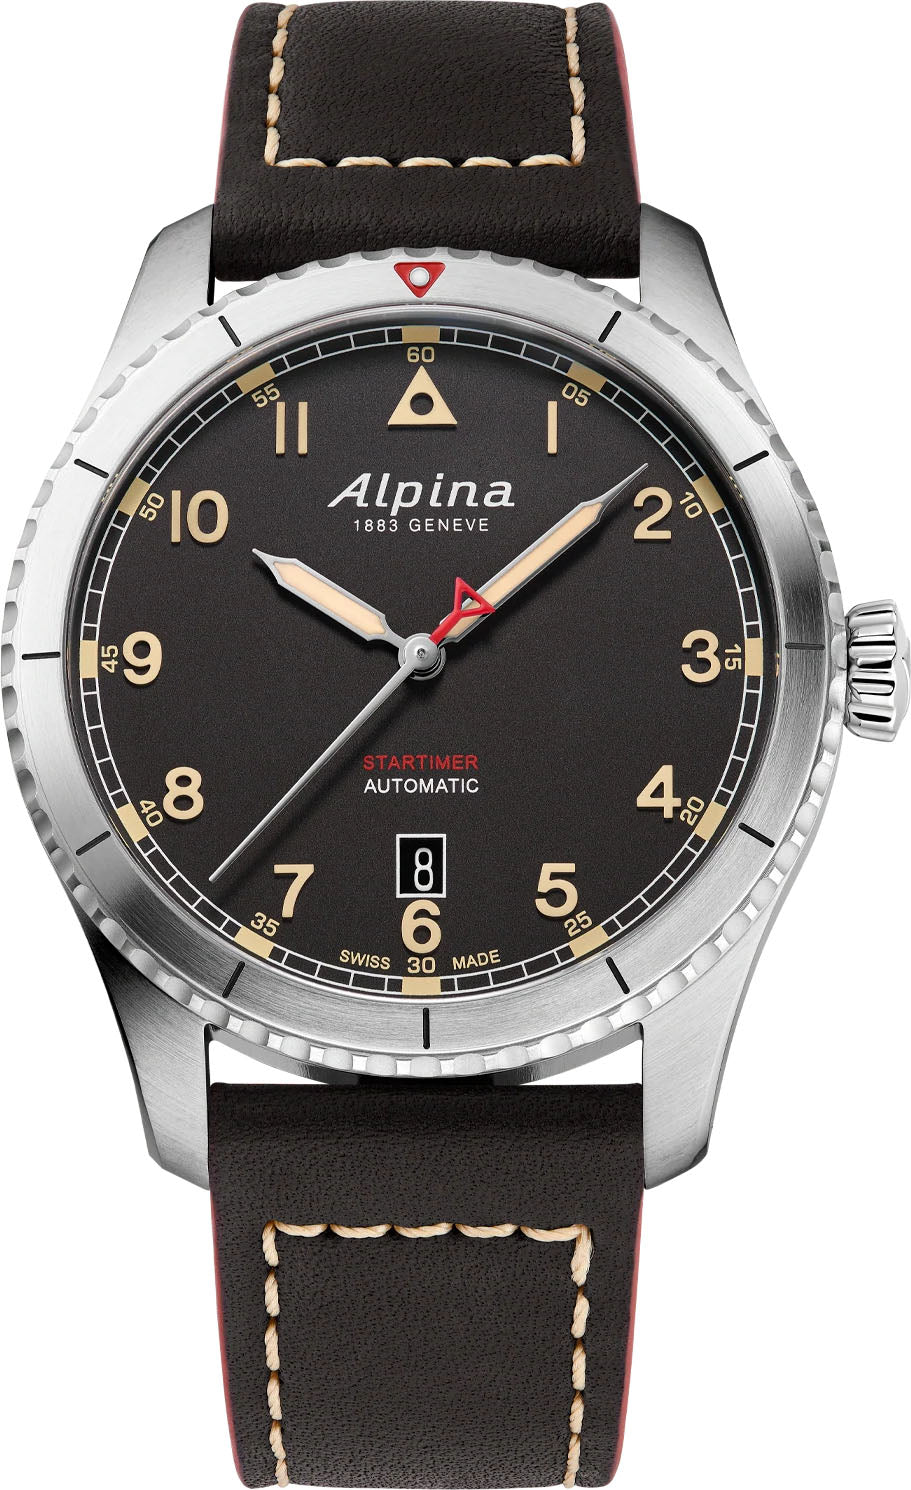 Photos - Wrist Watch Alpina Watch Startimer Pilot Automatic Black ALP-363 